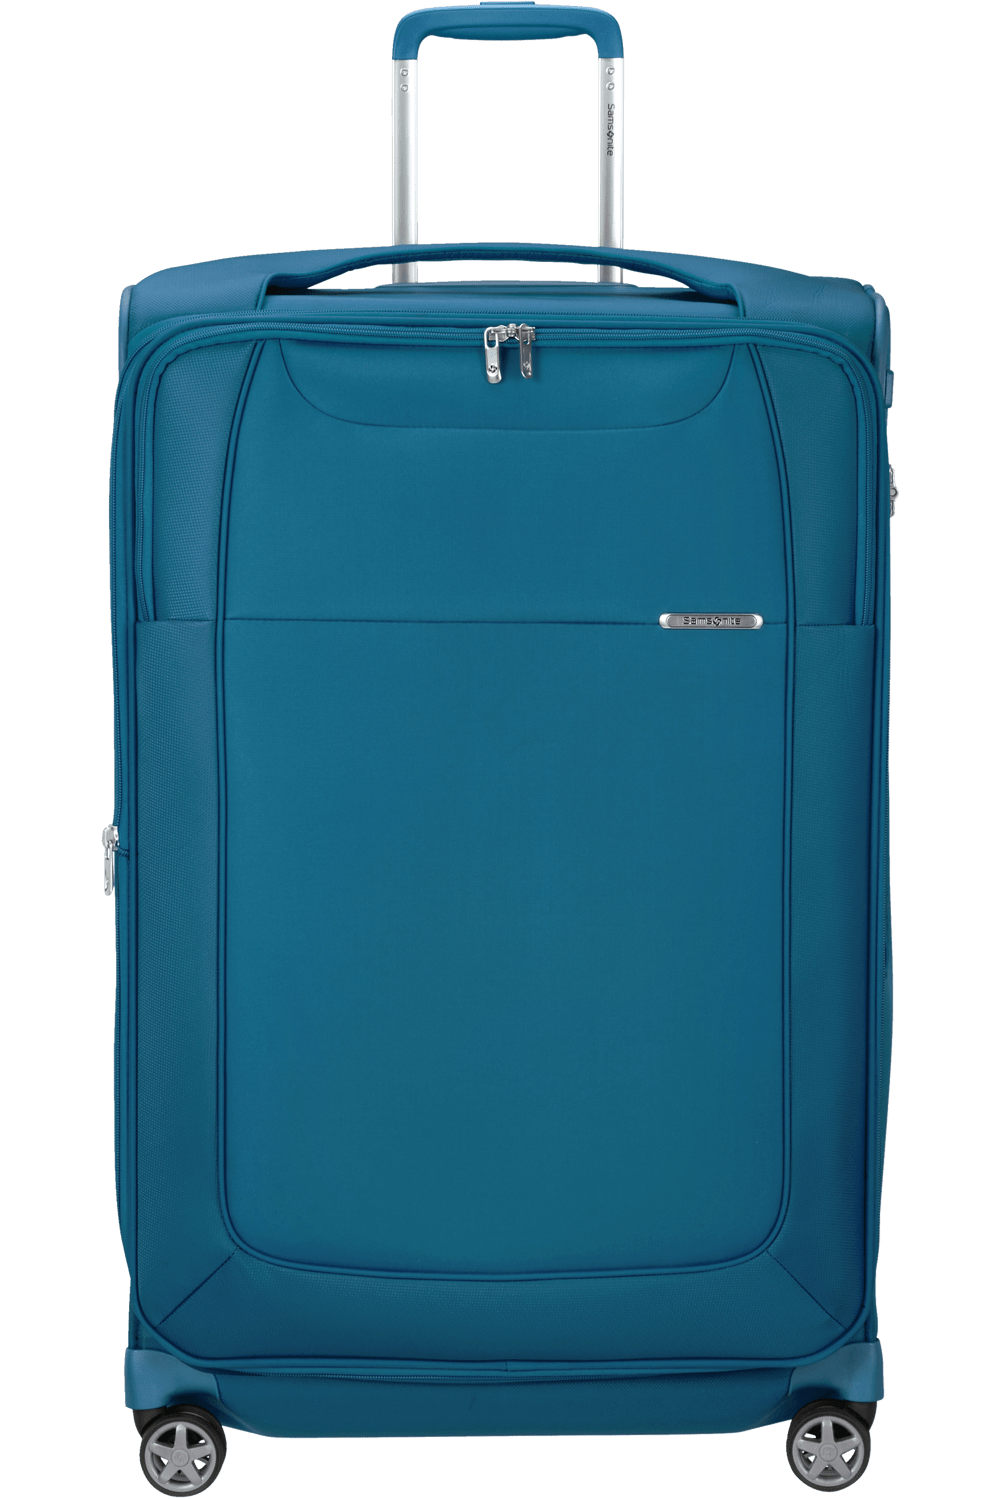 Samsonite D'Lite Spinner Large Luggage - Limited Edition: Petrol Blue